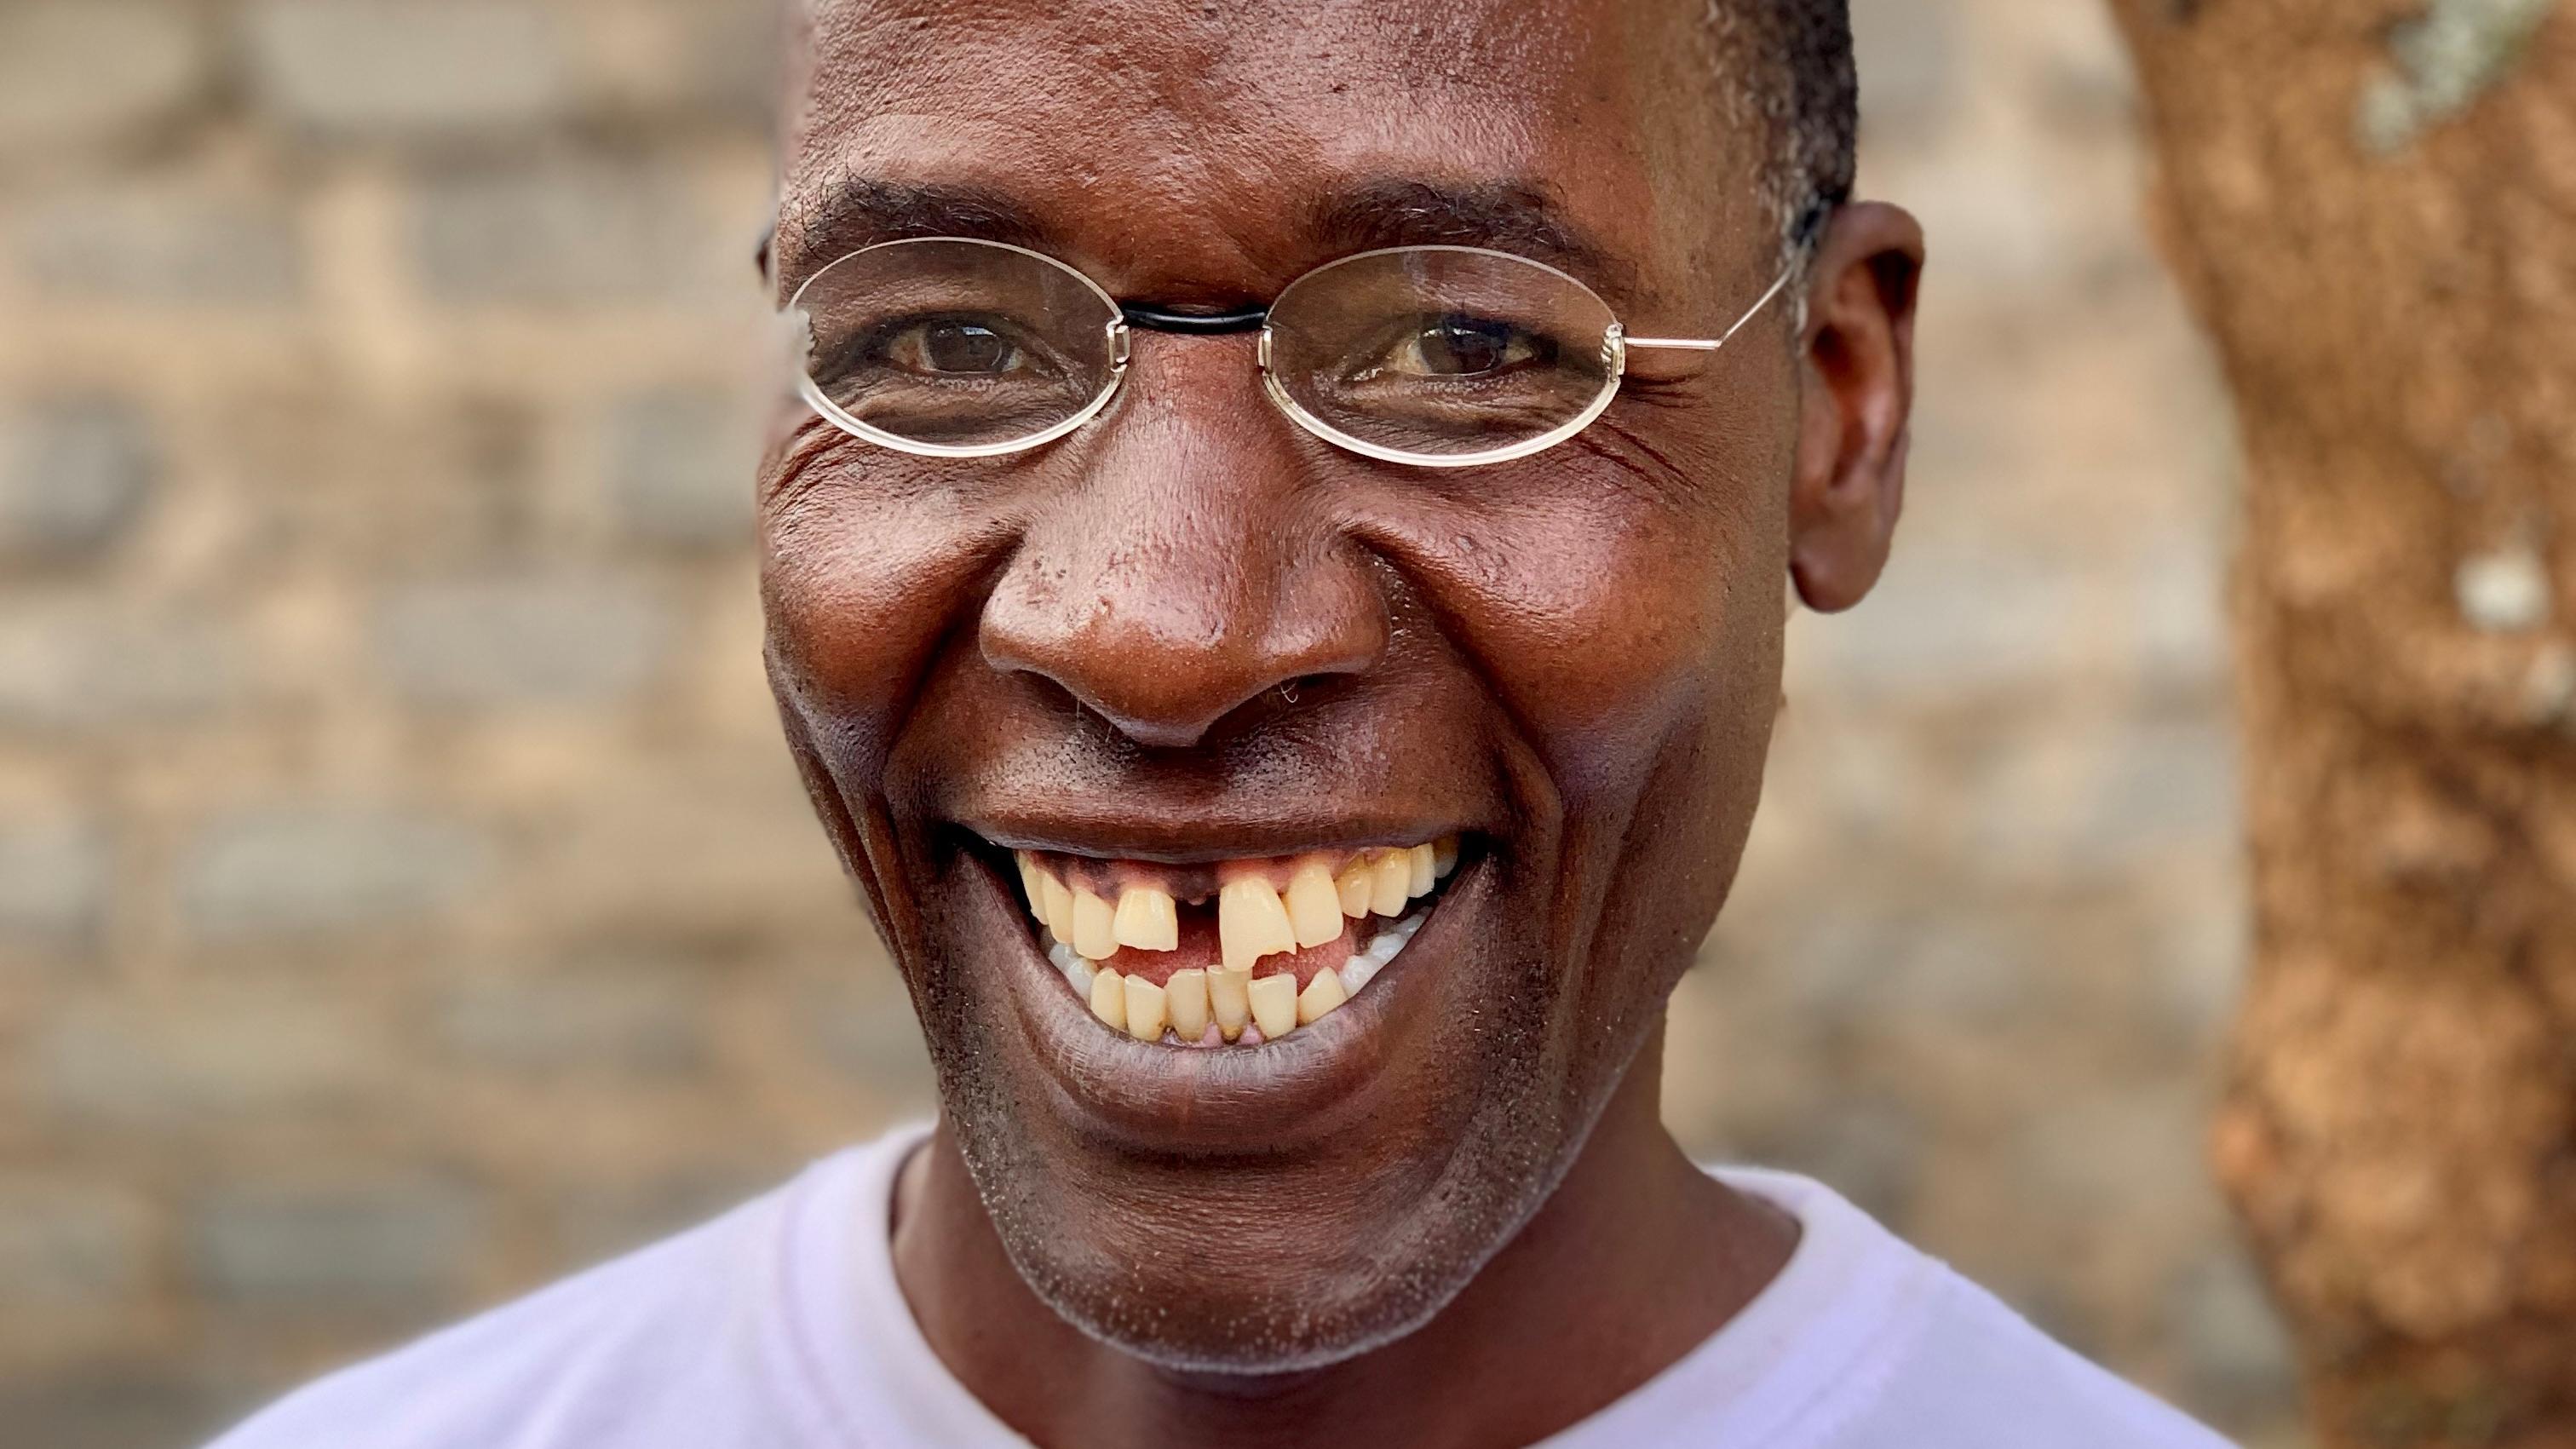 Kenianischer Mann vor Baum lacht